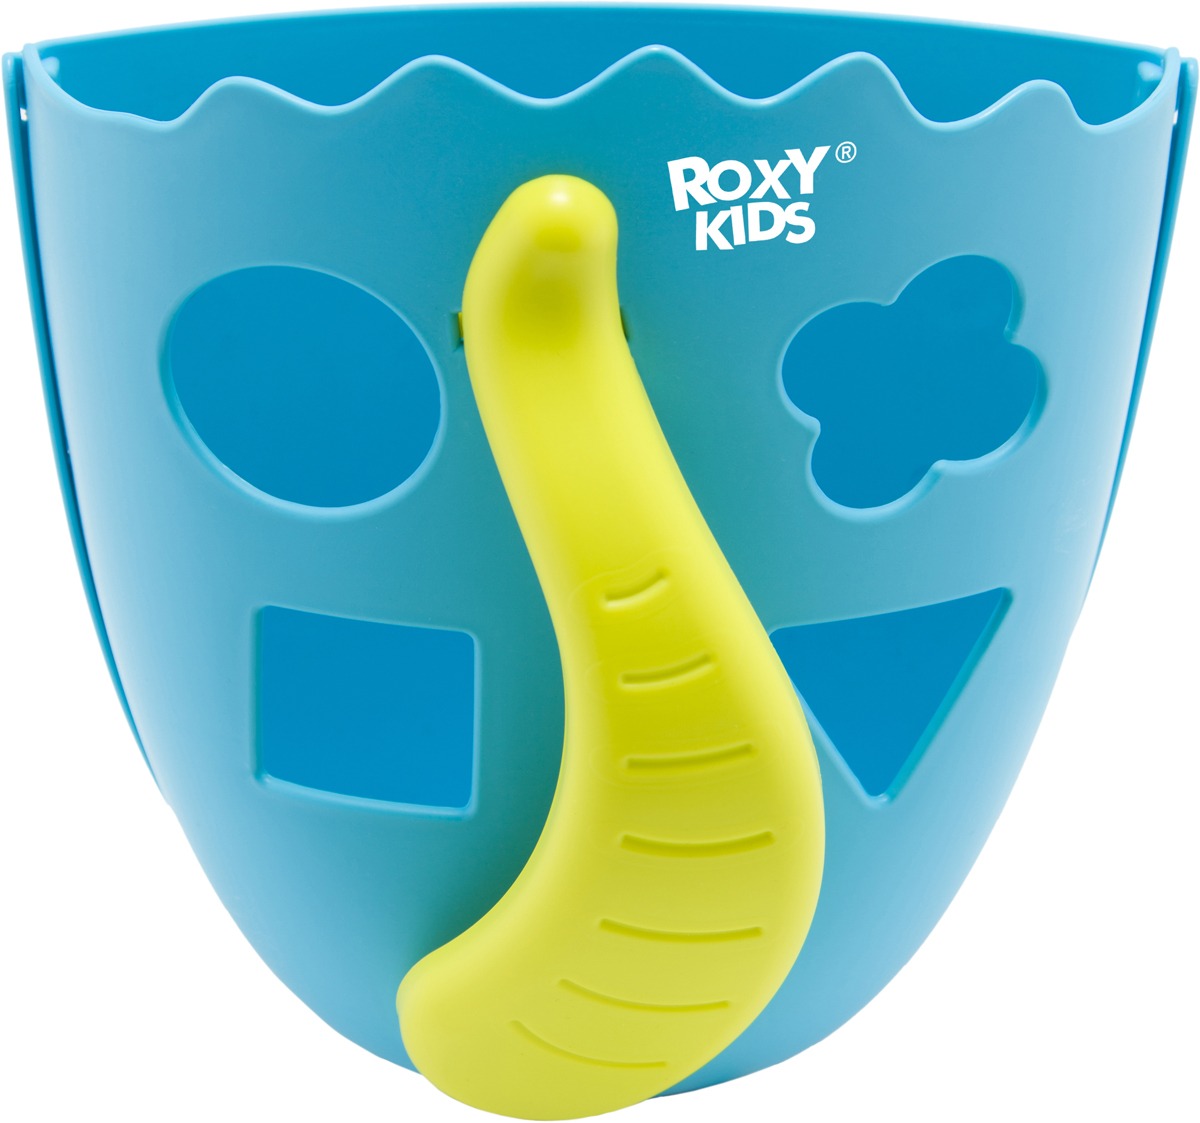 Roxy-kids Органайзер для игрушек Dino цвет синий желтый